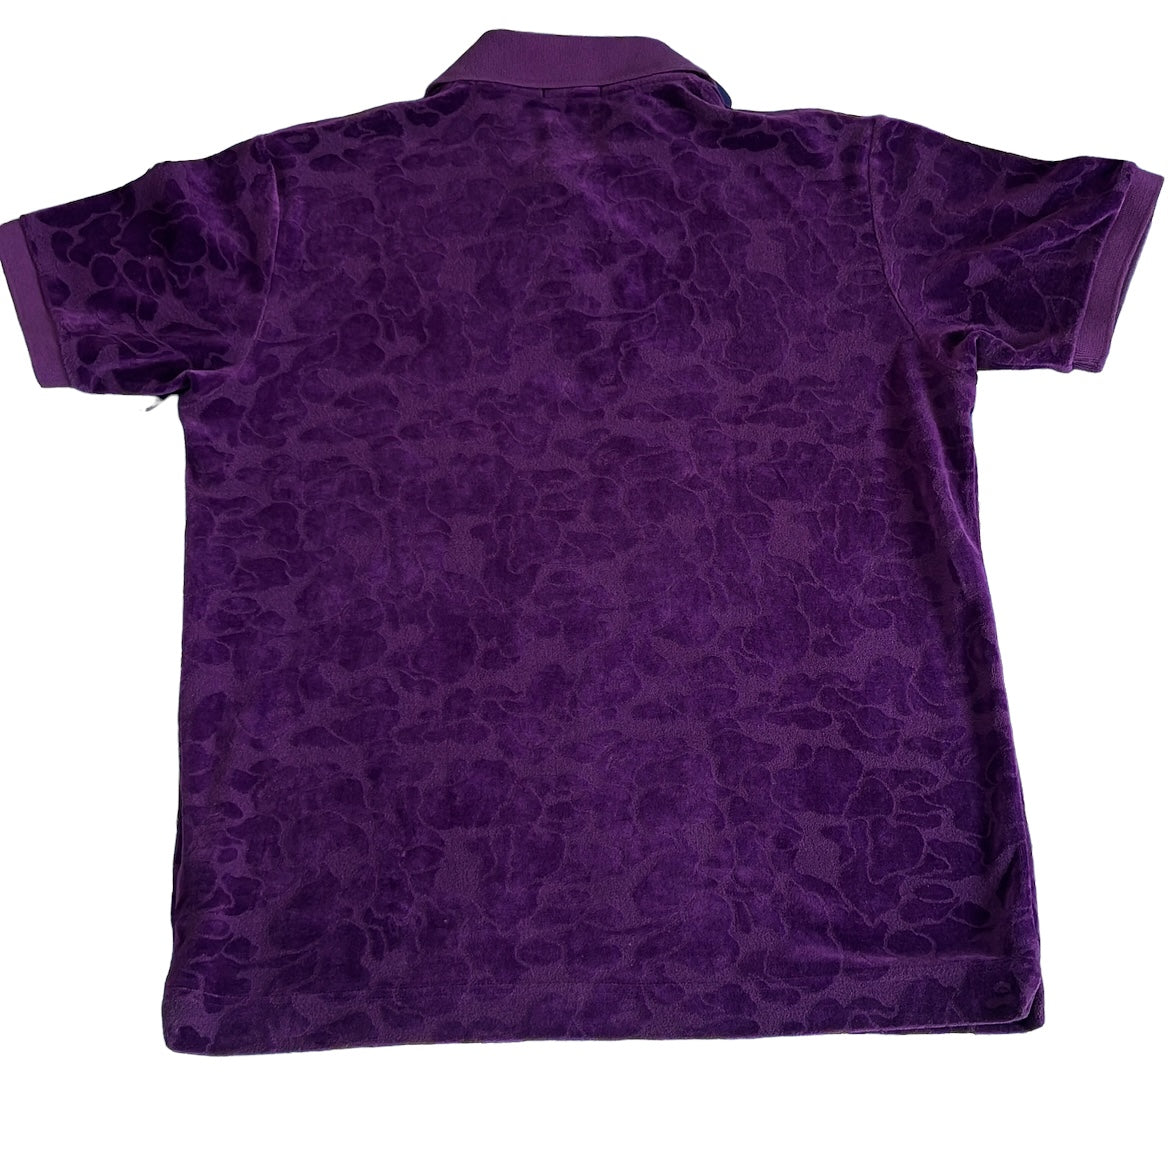 2007 Bape purple velour polo (Medium)